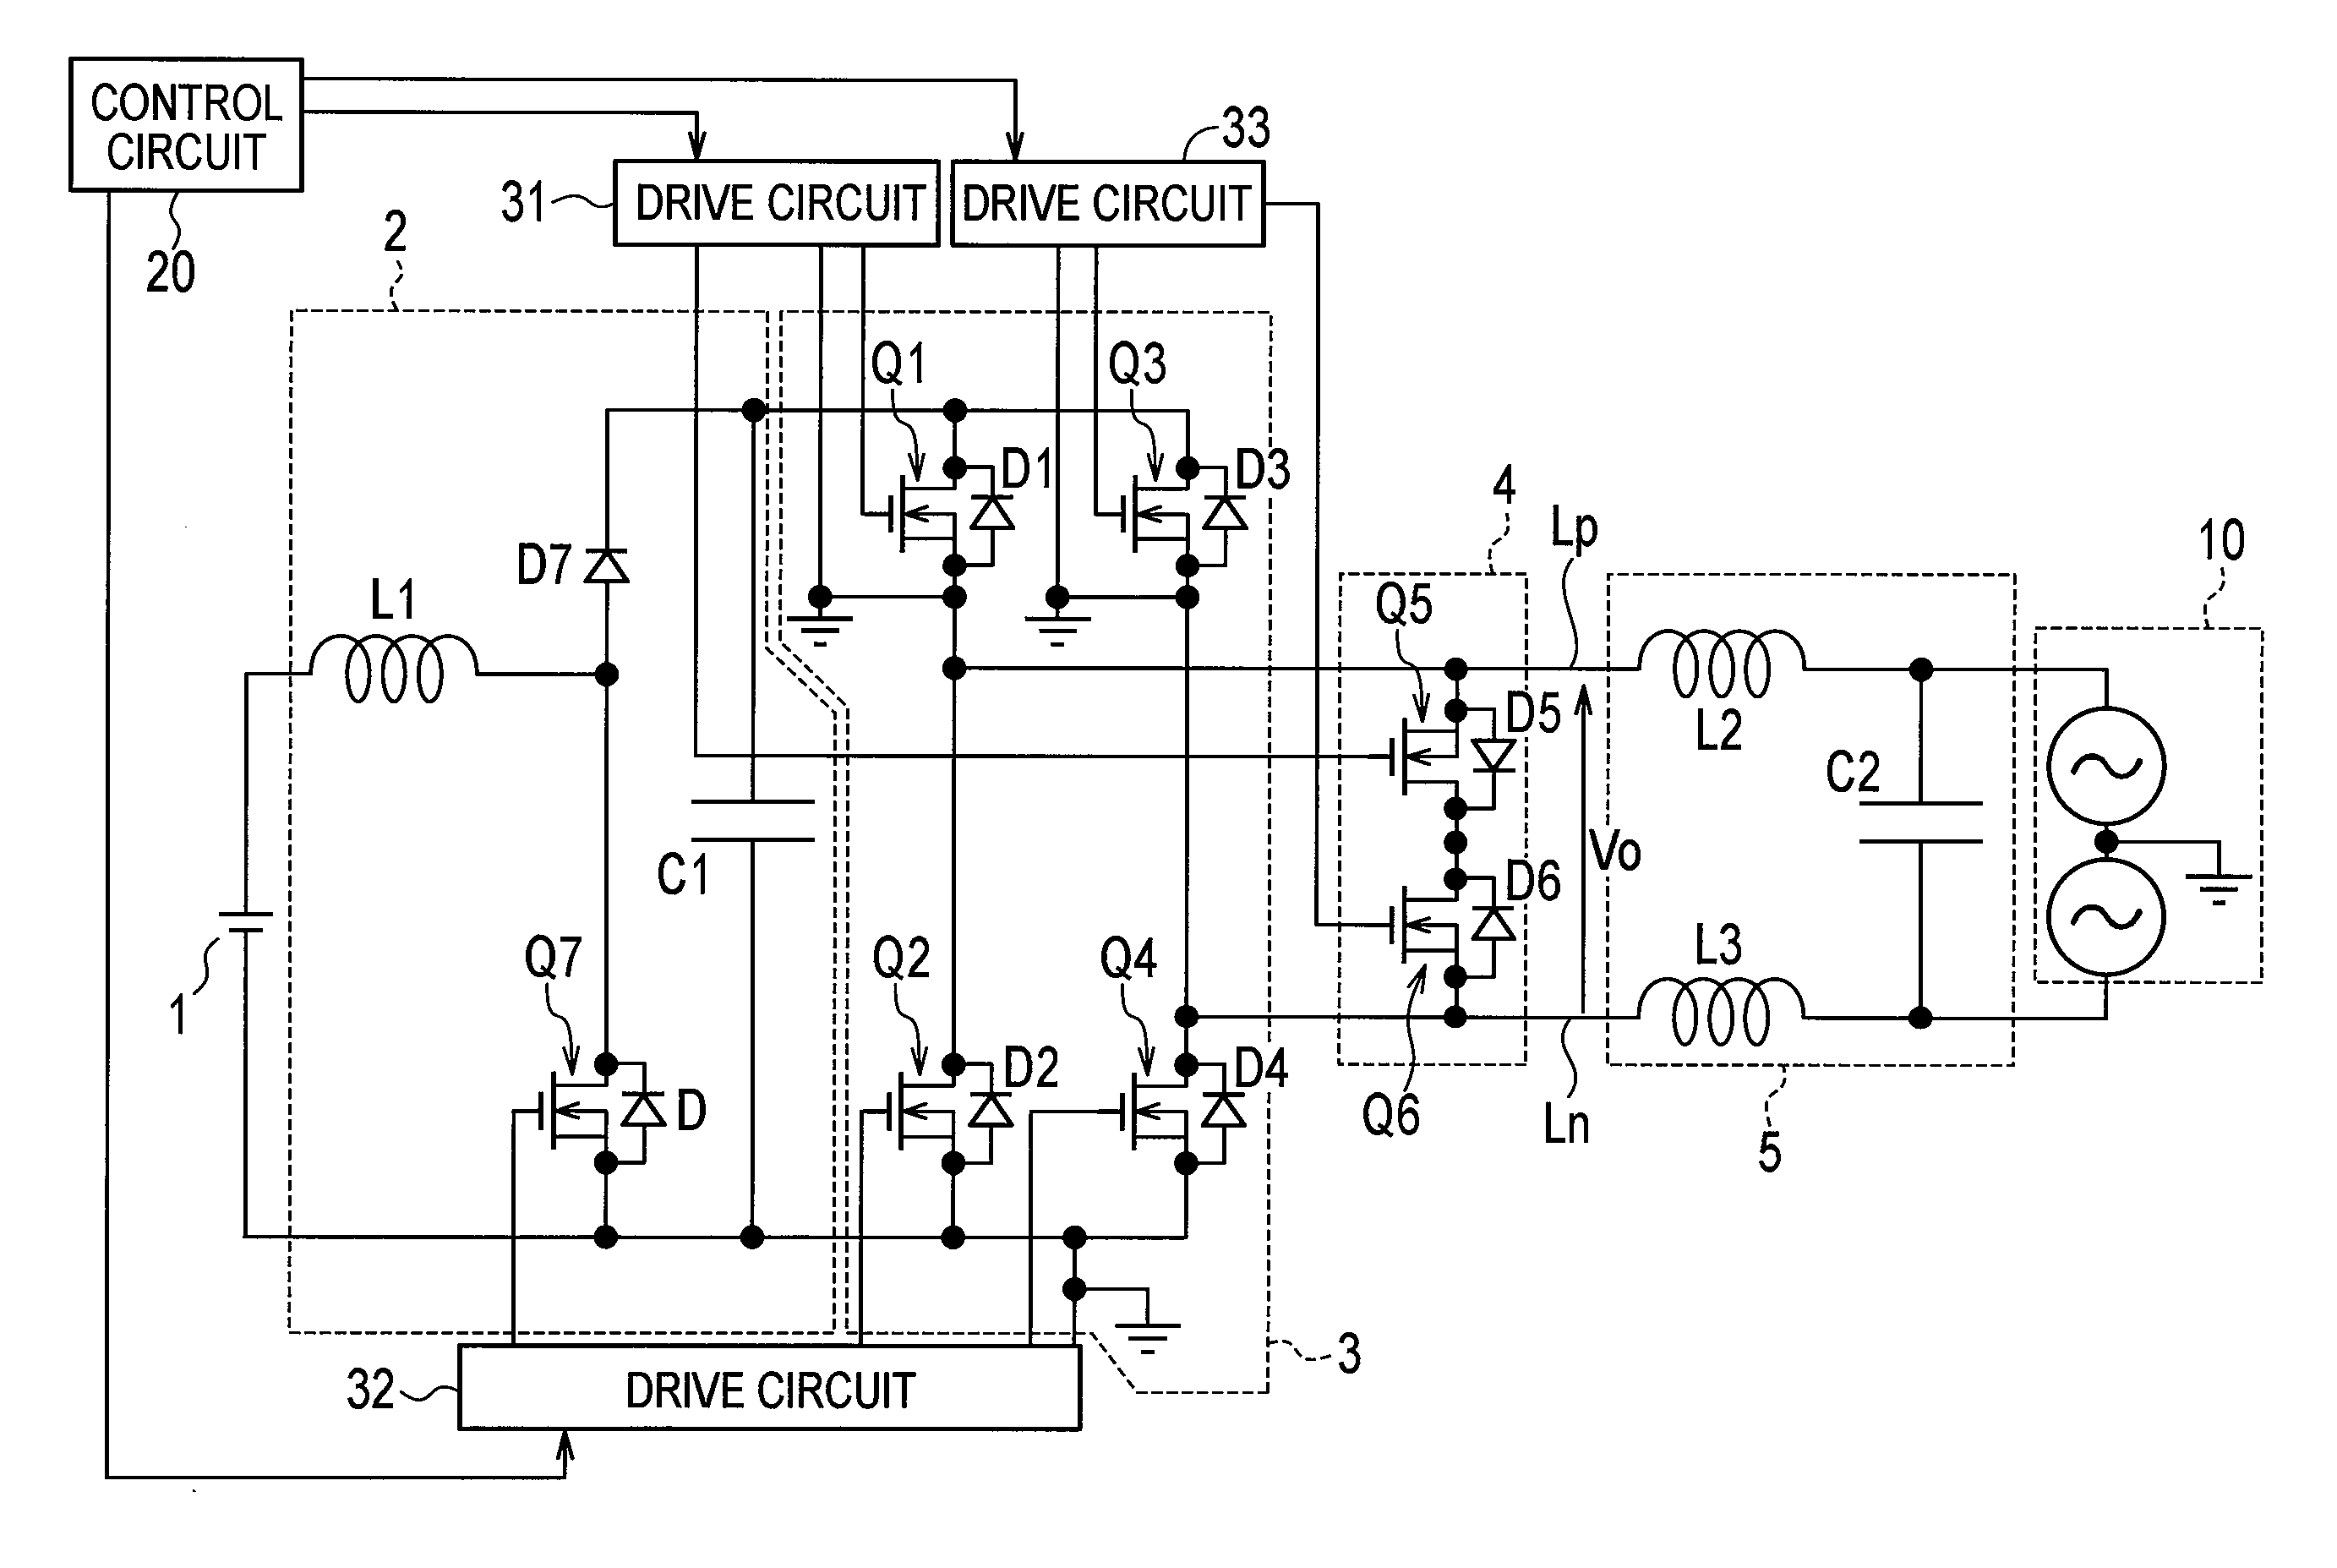 Power converting apparatus, grid interconnection apparatus and grid interconnection system